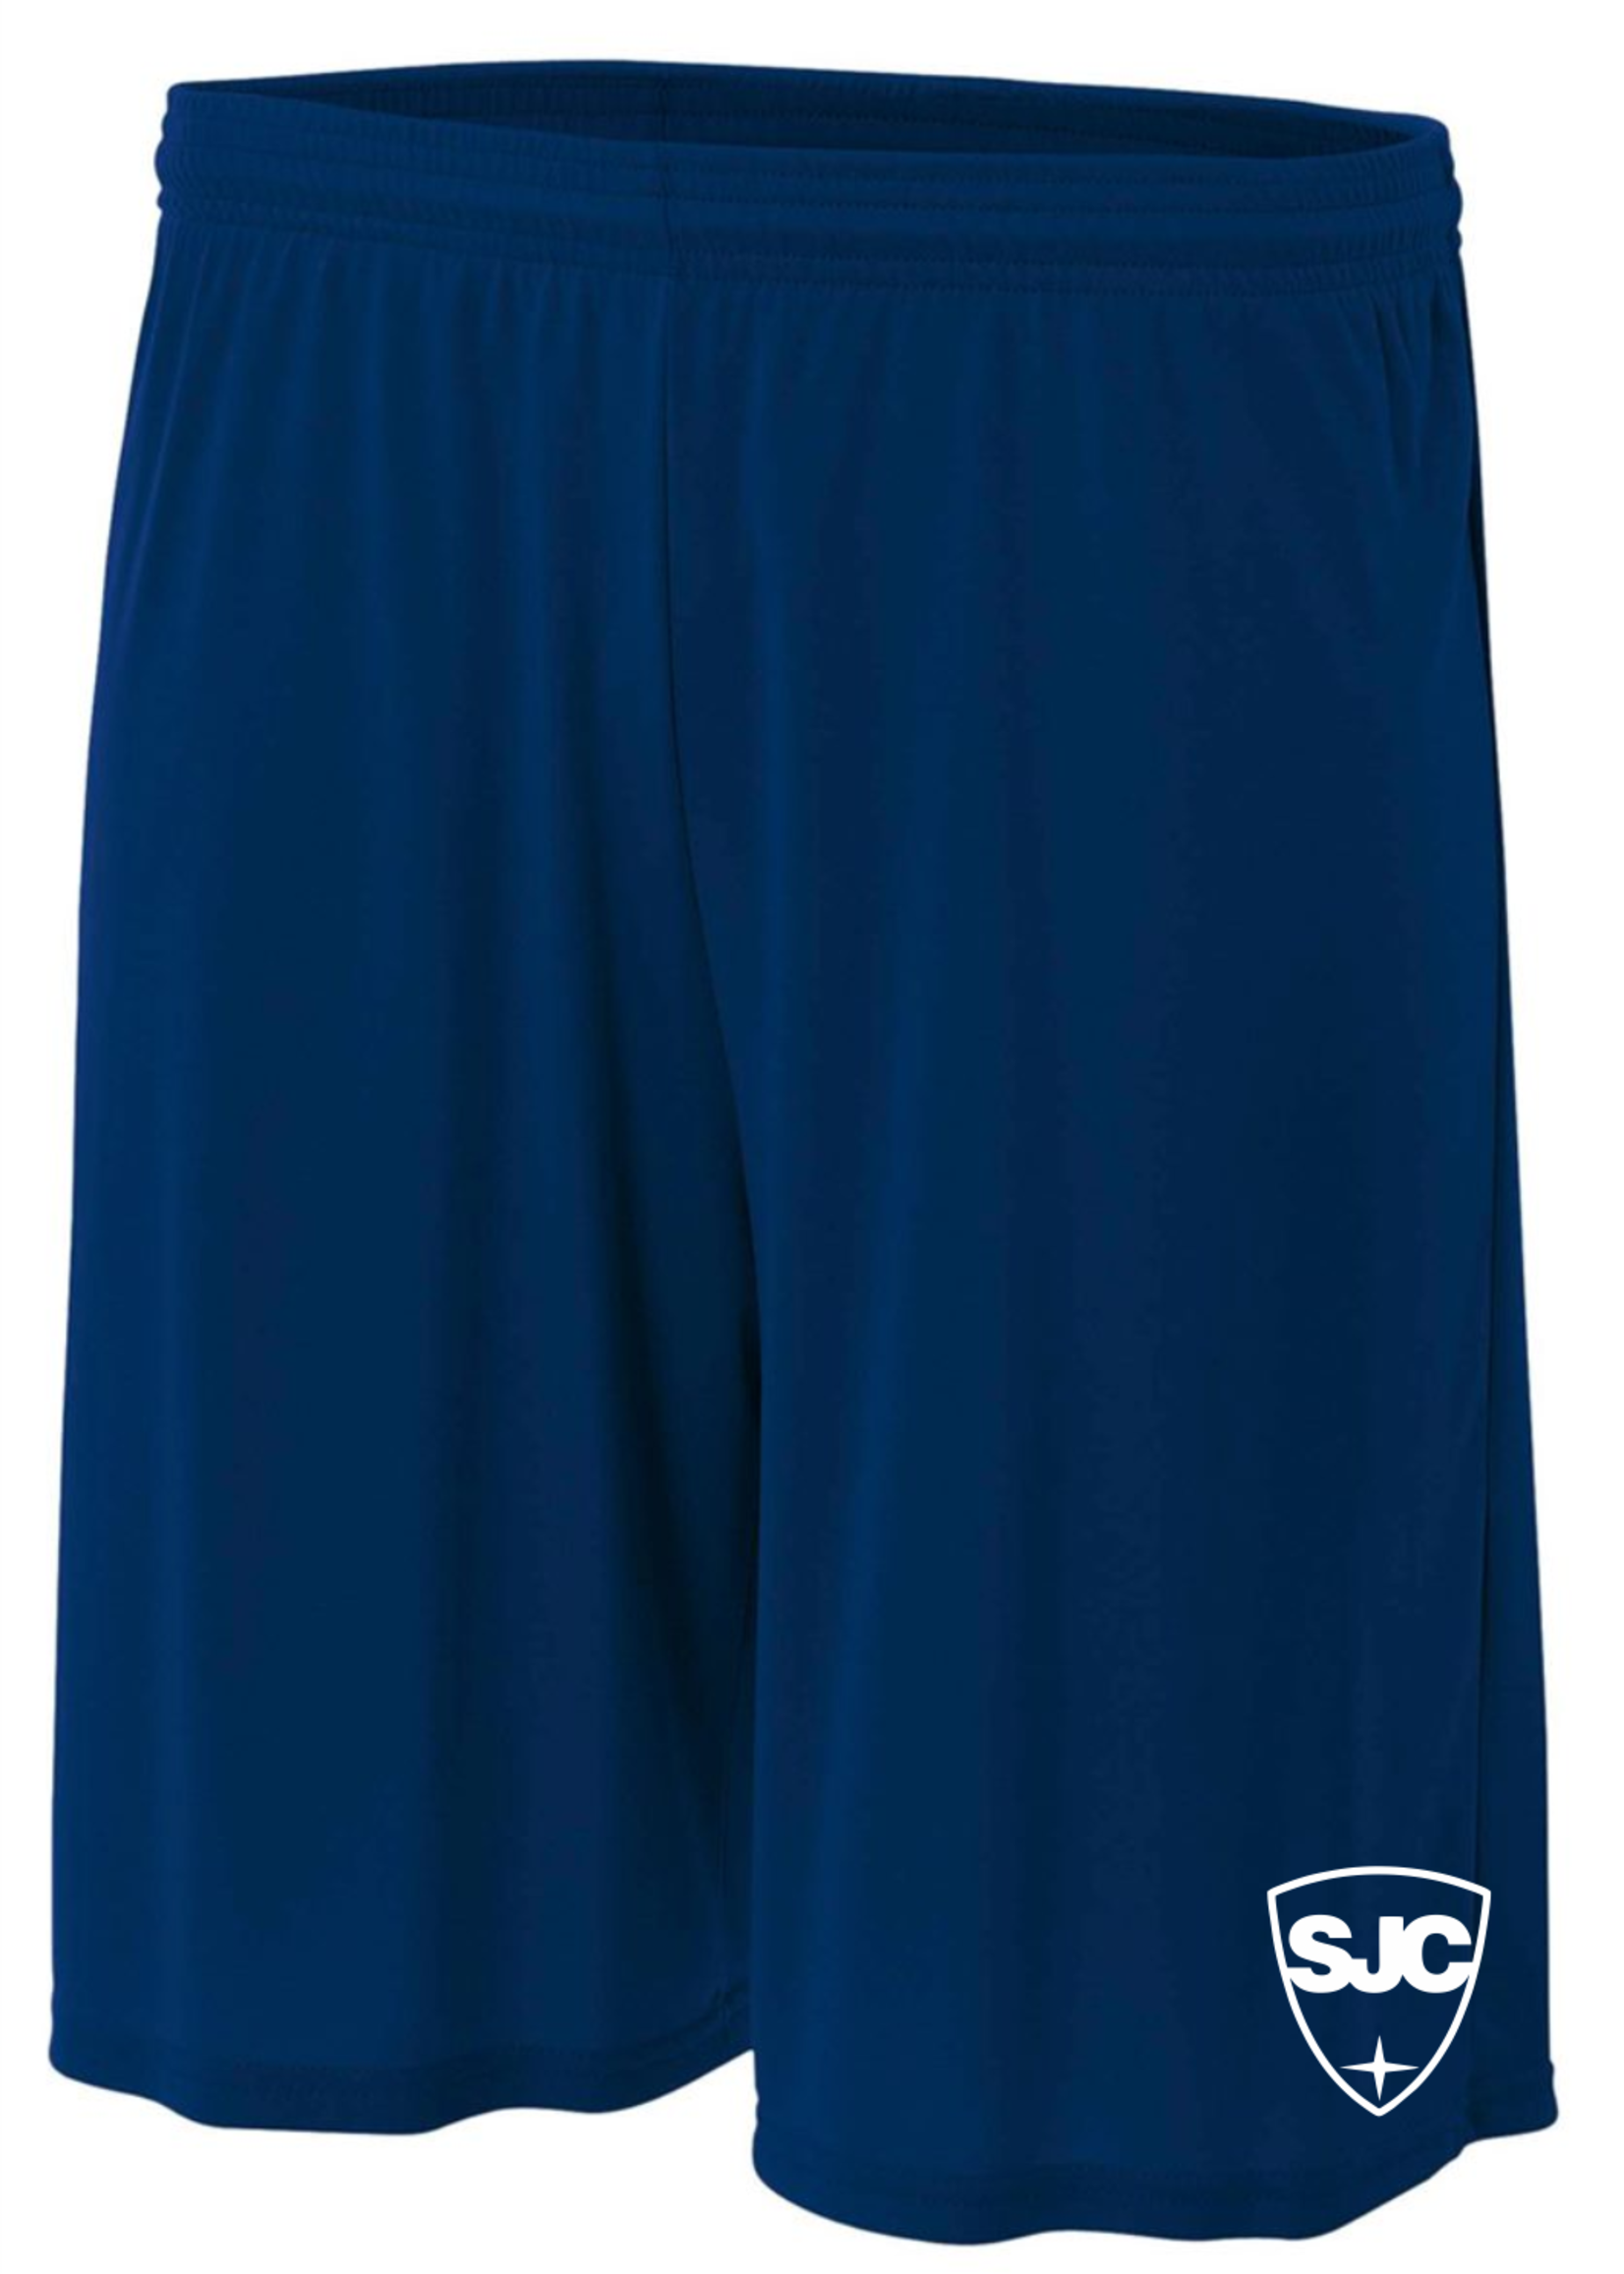 1540 SJC Dry Fit Shorts Navy - The Uniform Store